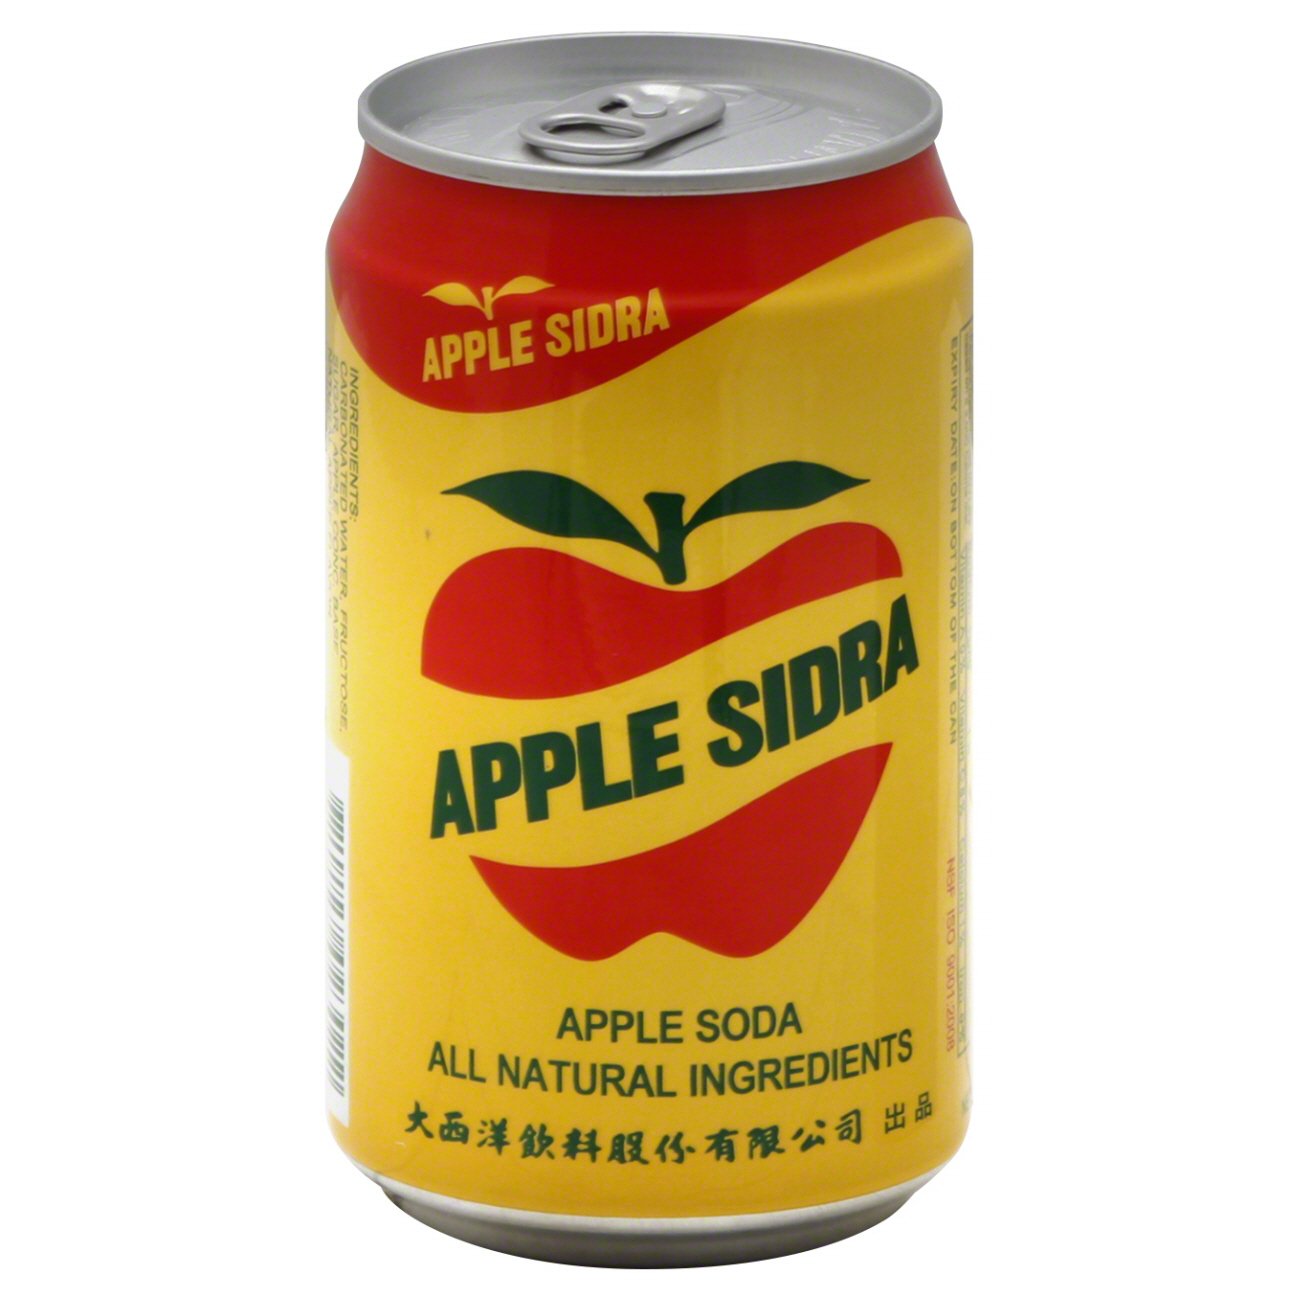 Apple Sidra Apple Soda